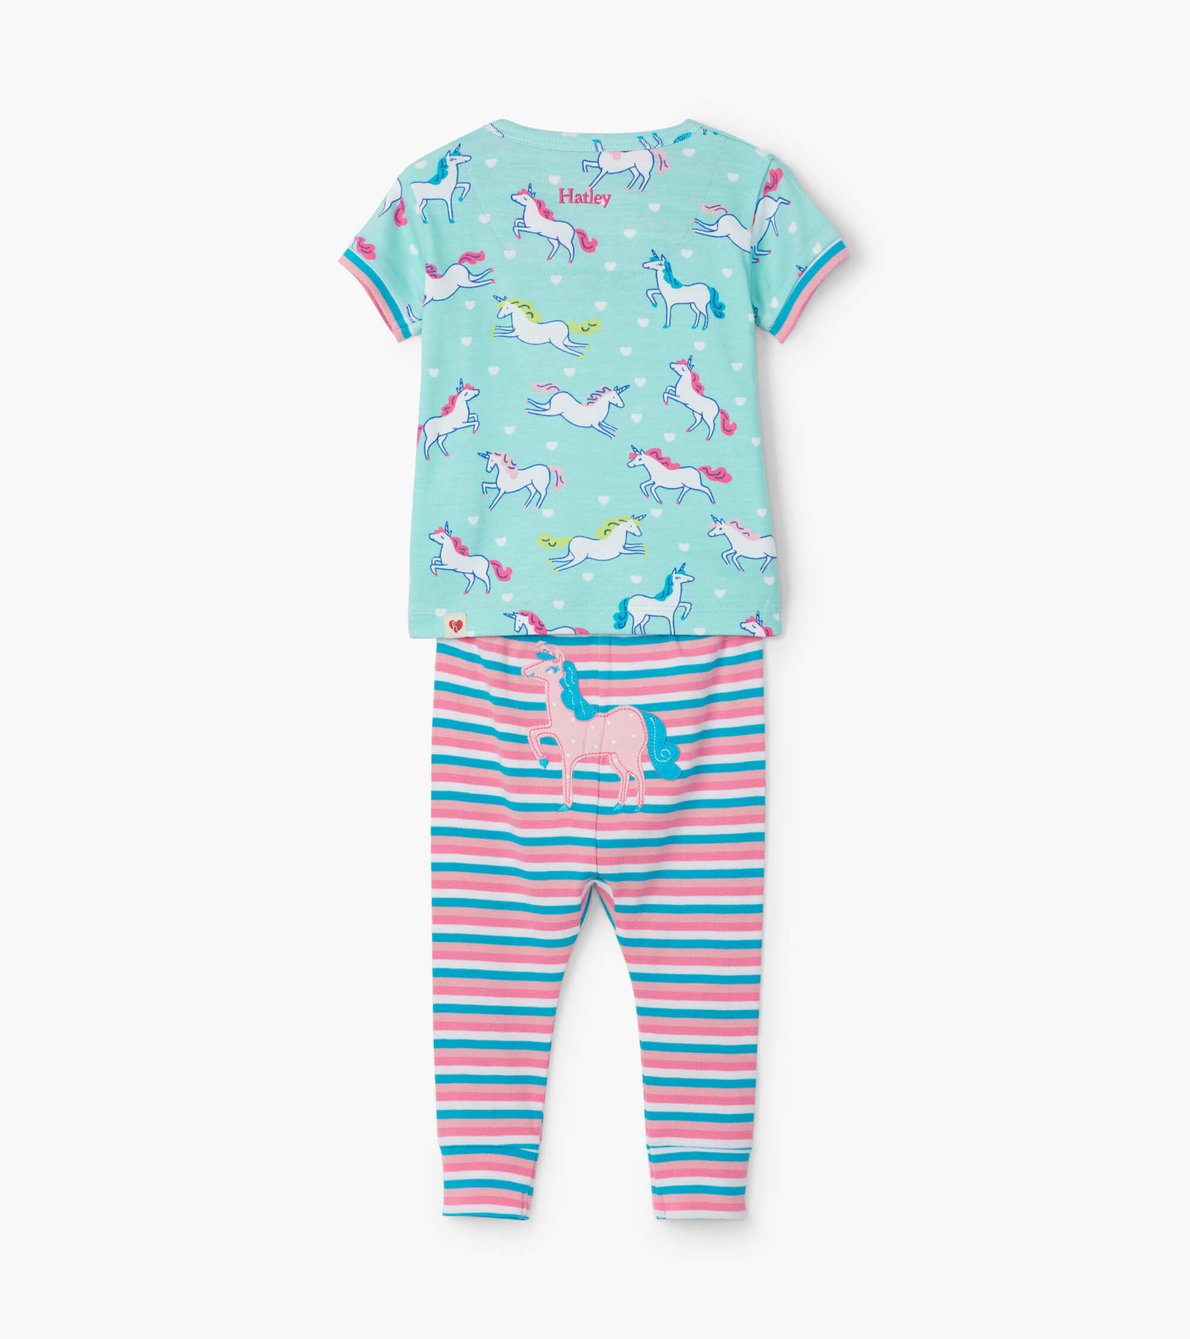 View larger image of Prancing Unicorns Organic Cotton Baby Short Sleeve Pajama Set